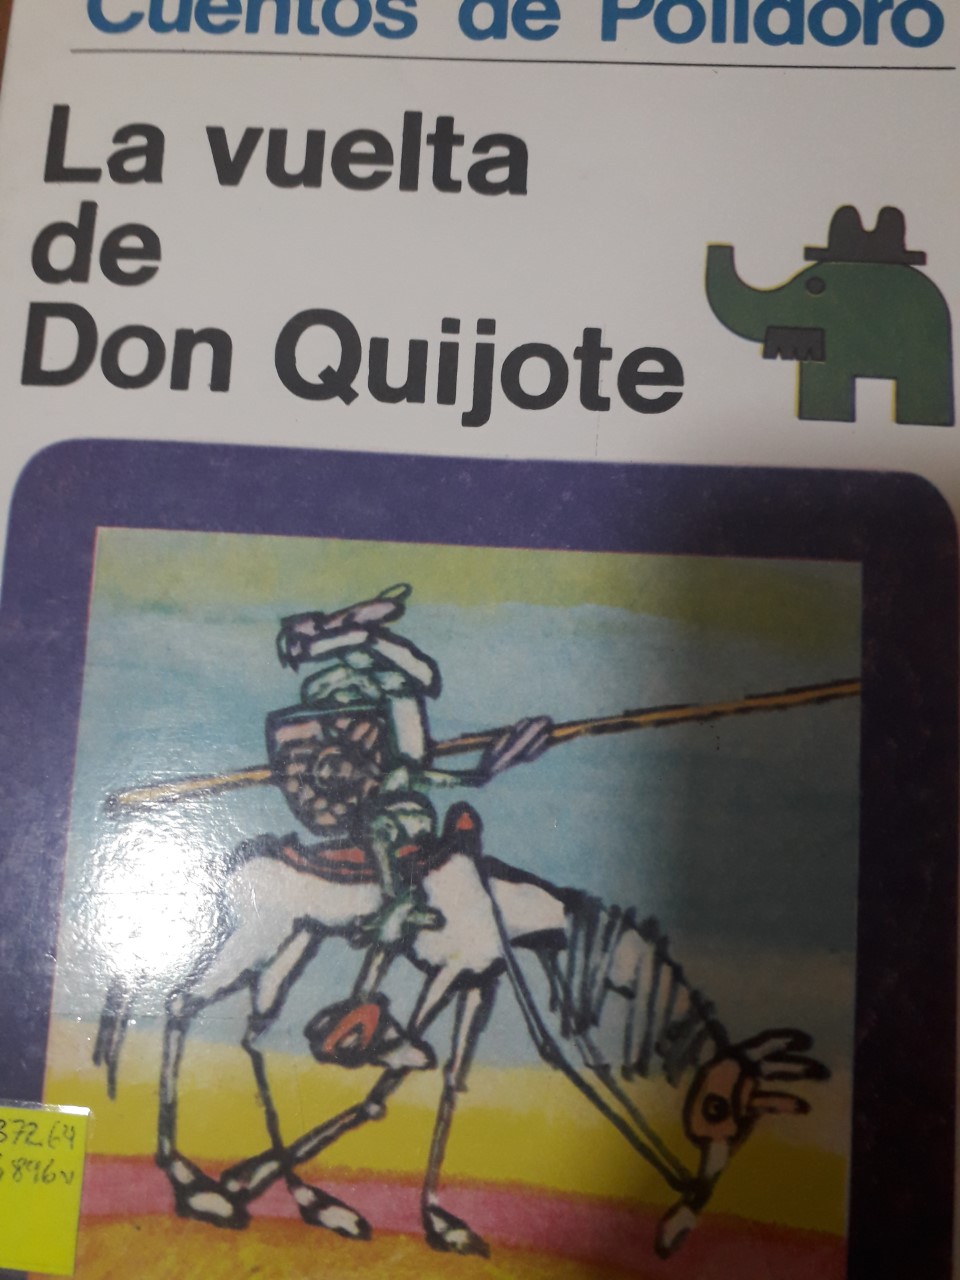 La vuelta de Don Quijote